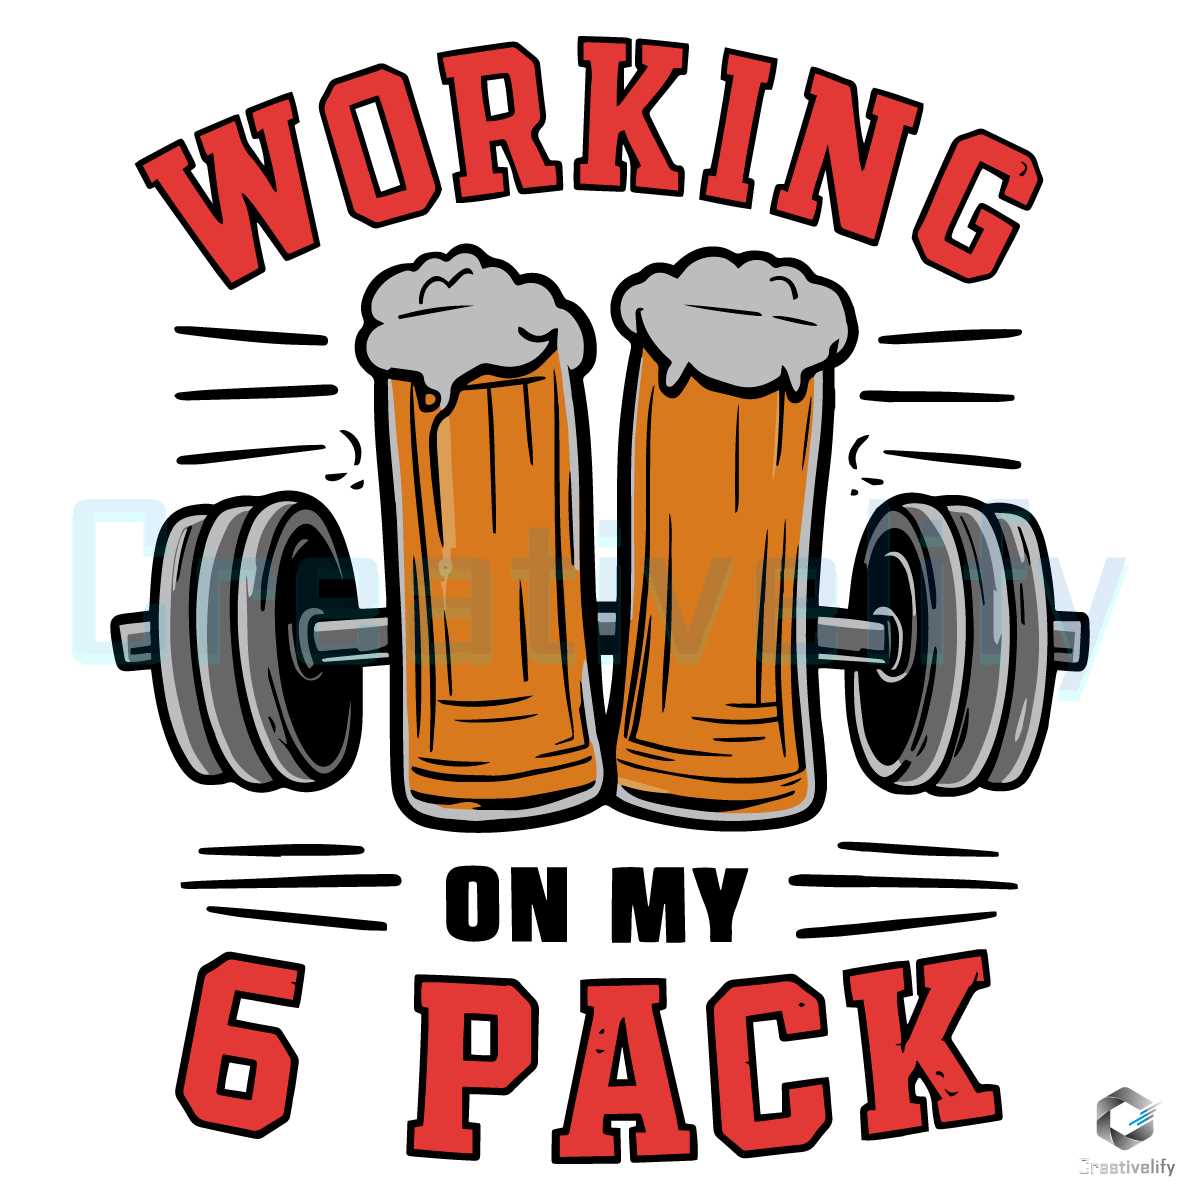 Working On My 6 Pack Beer Dad SVG